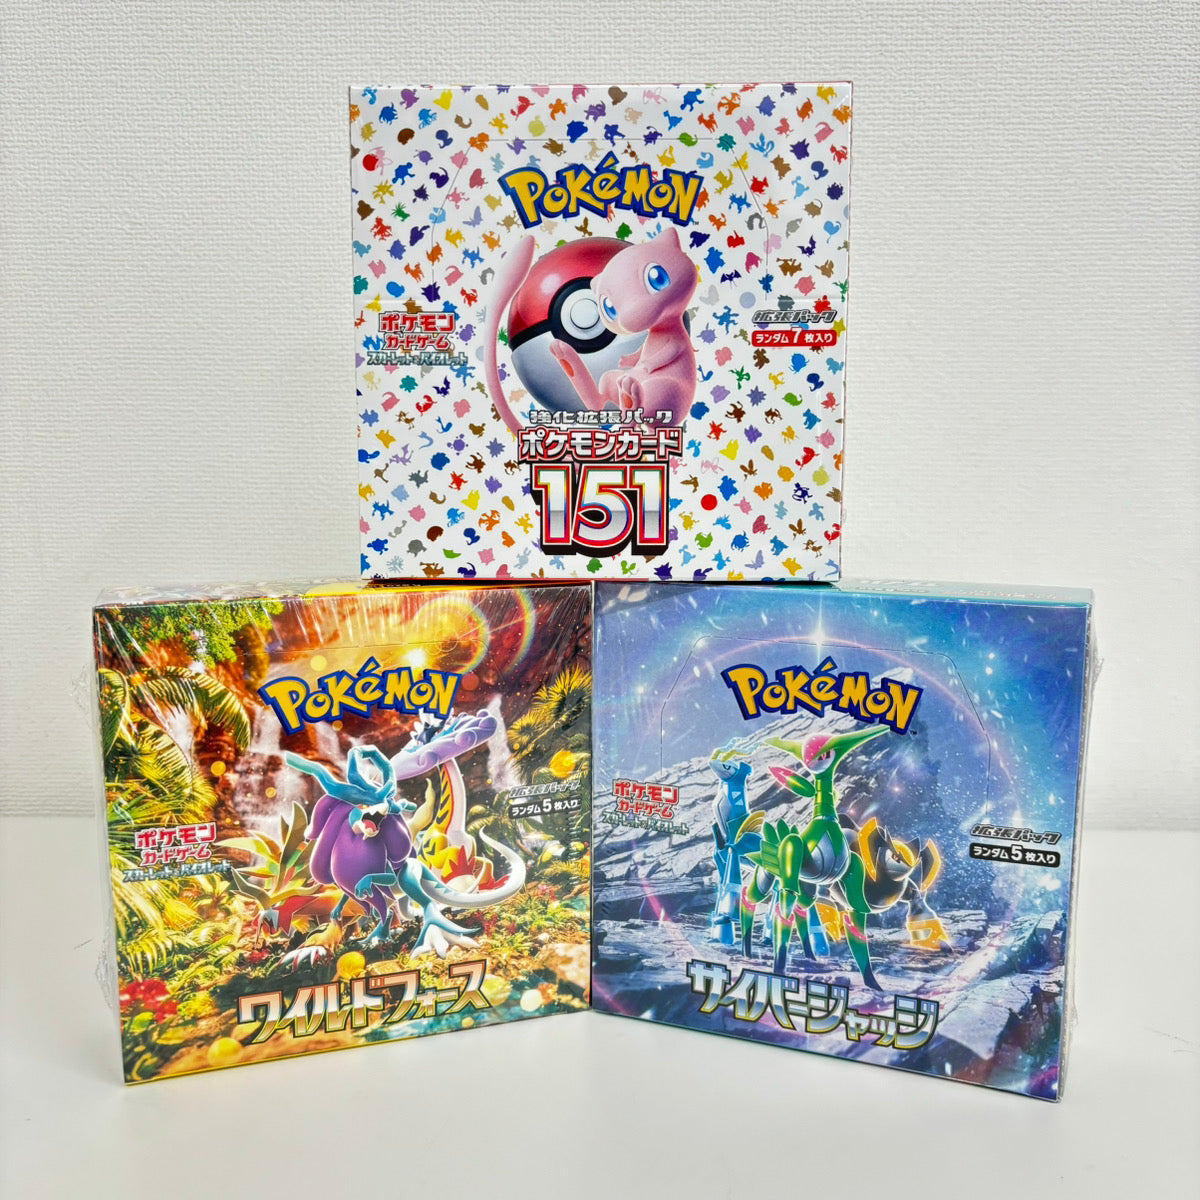 Pokemon Card Scarlet & Violet Booster Box Pokemon 151 & Wild Force & Cyber Judge sv2a sv5K sv5M Booster Box set Japanese